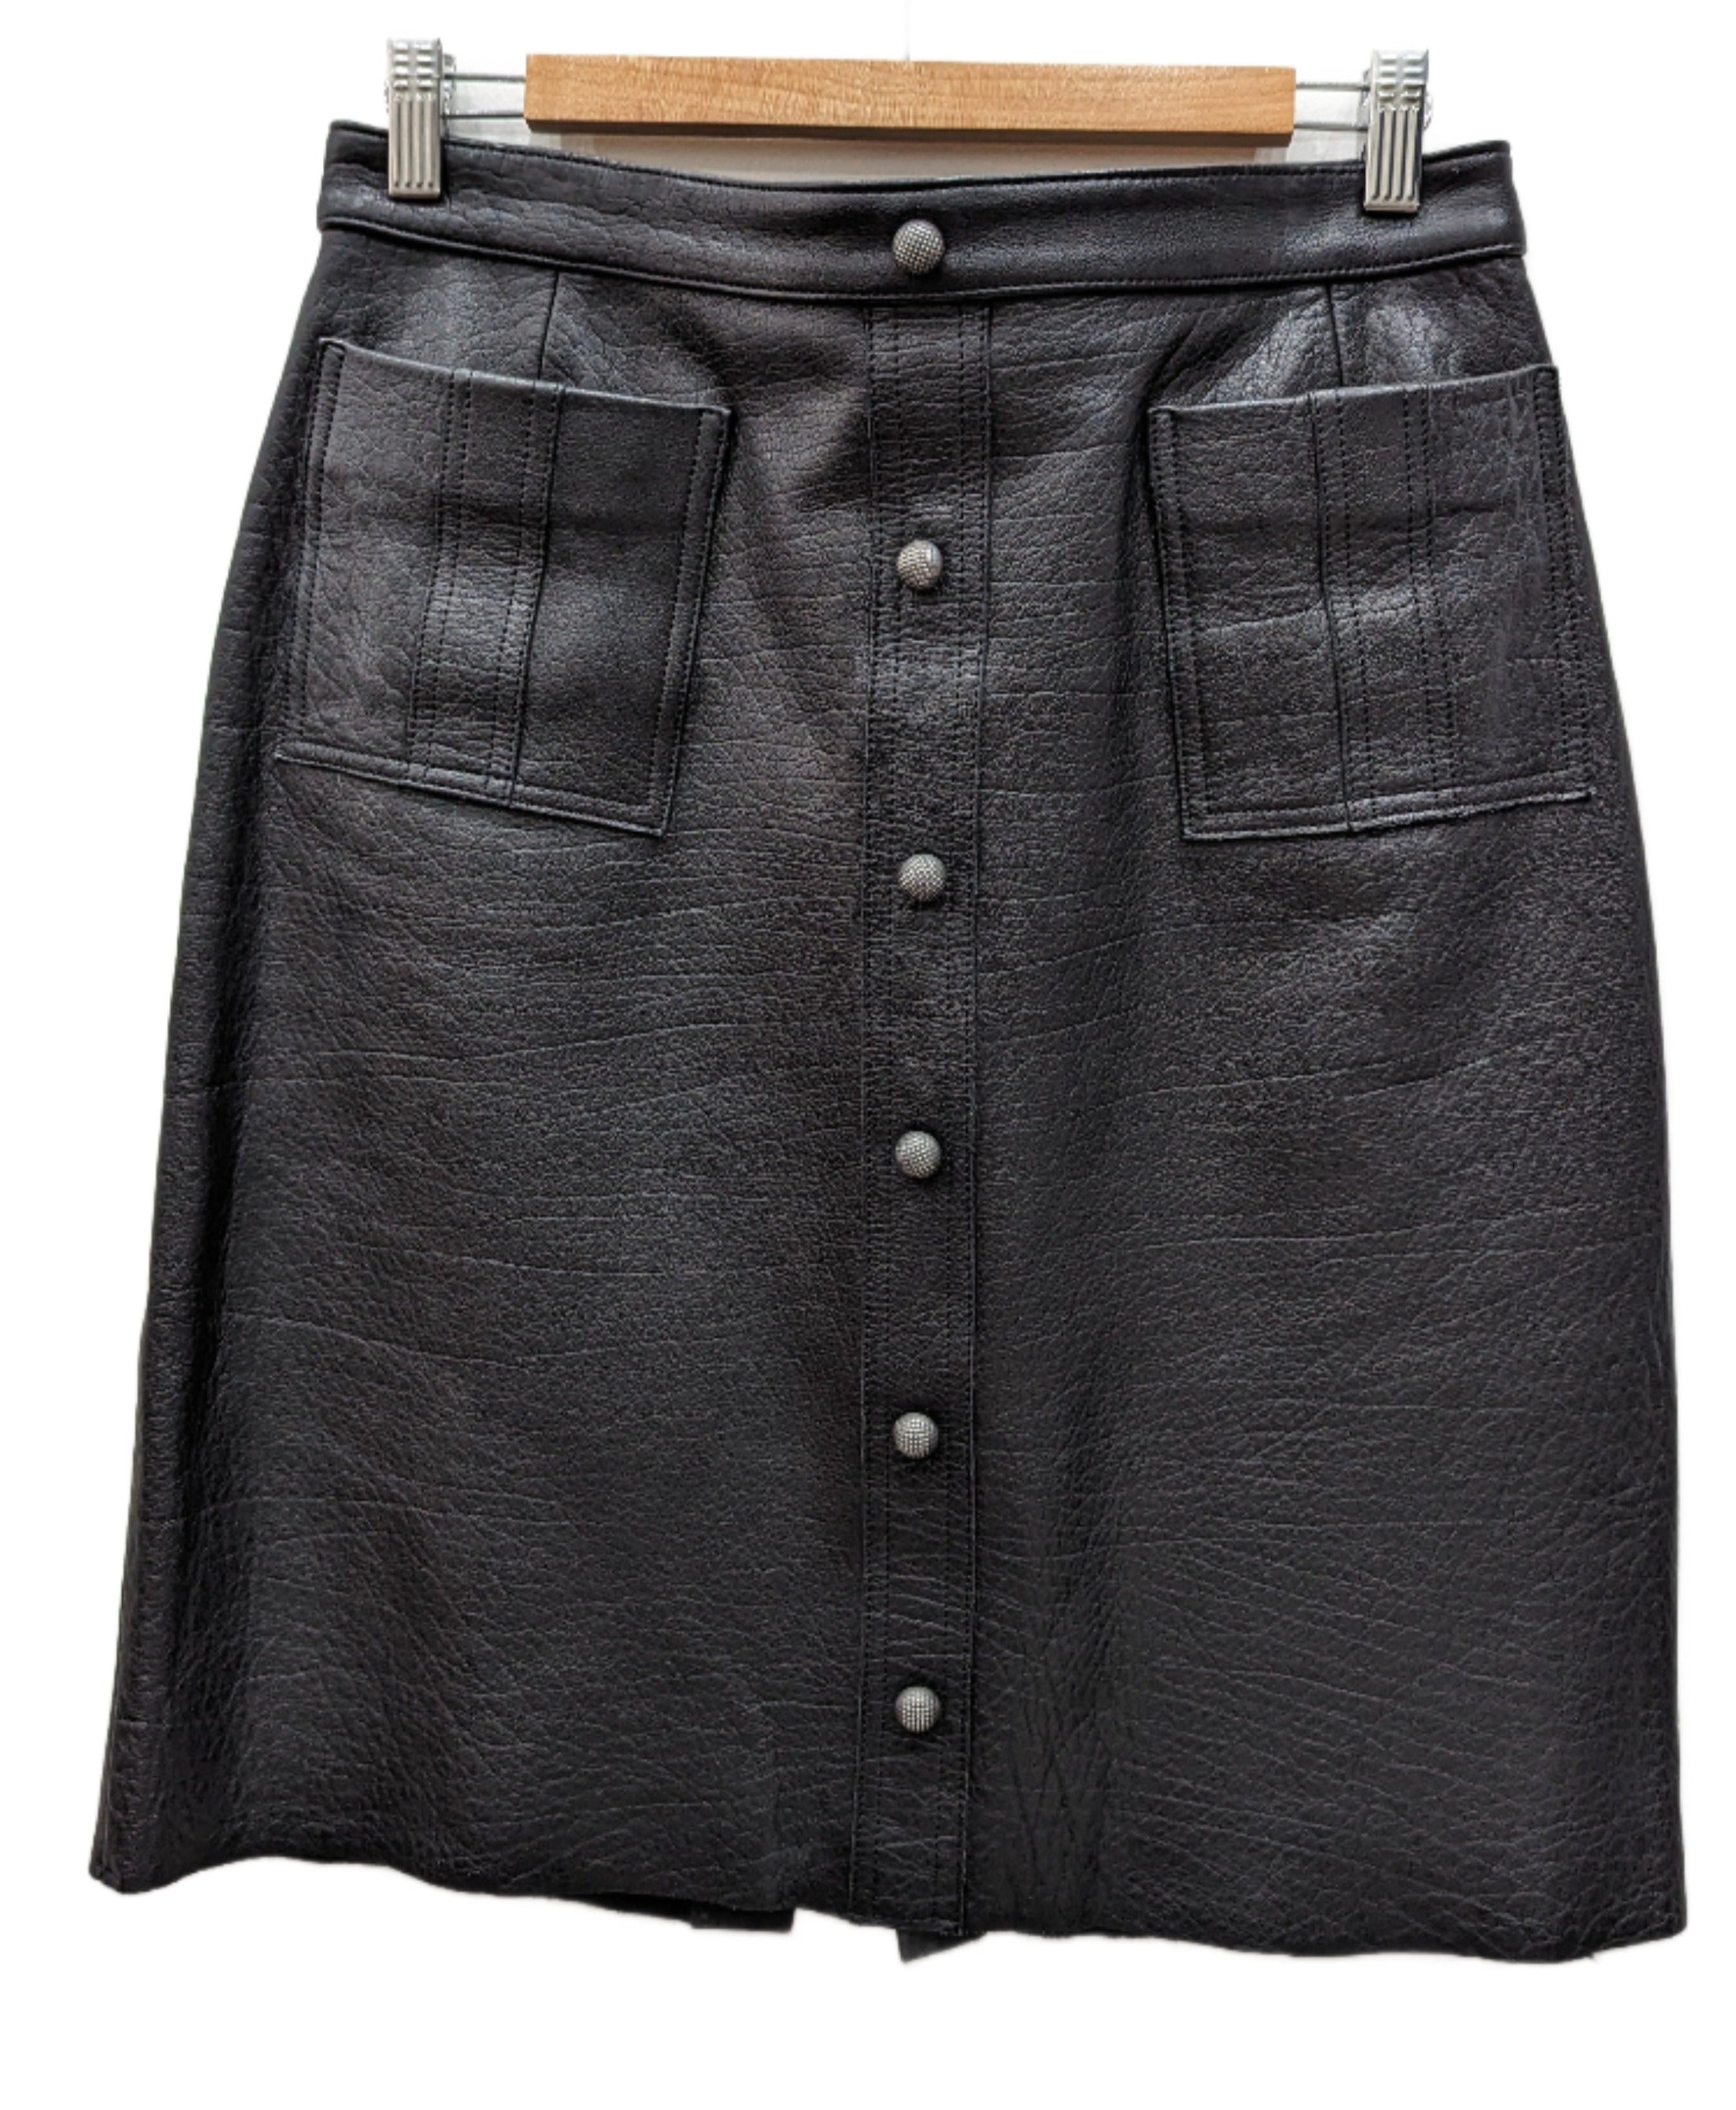 Aje Black Leather Mini Skirt